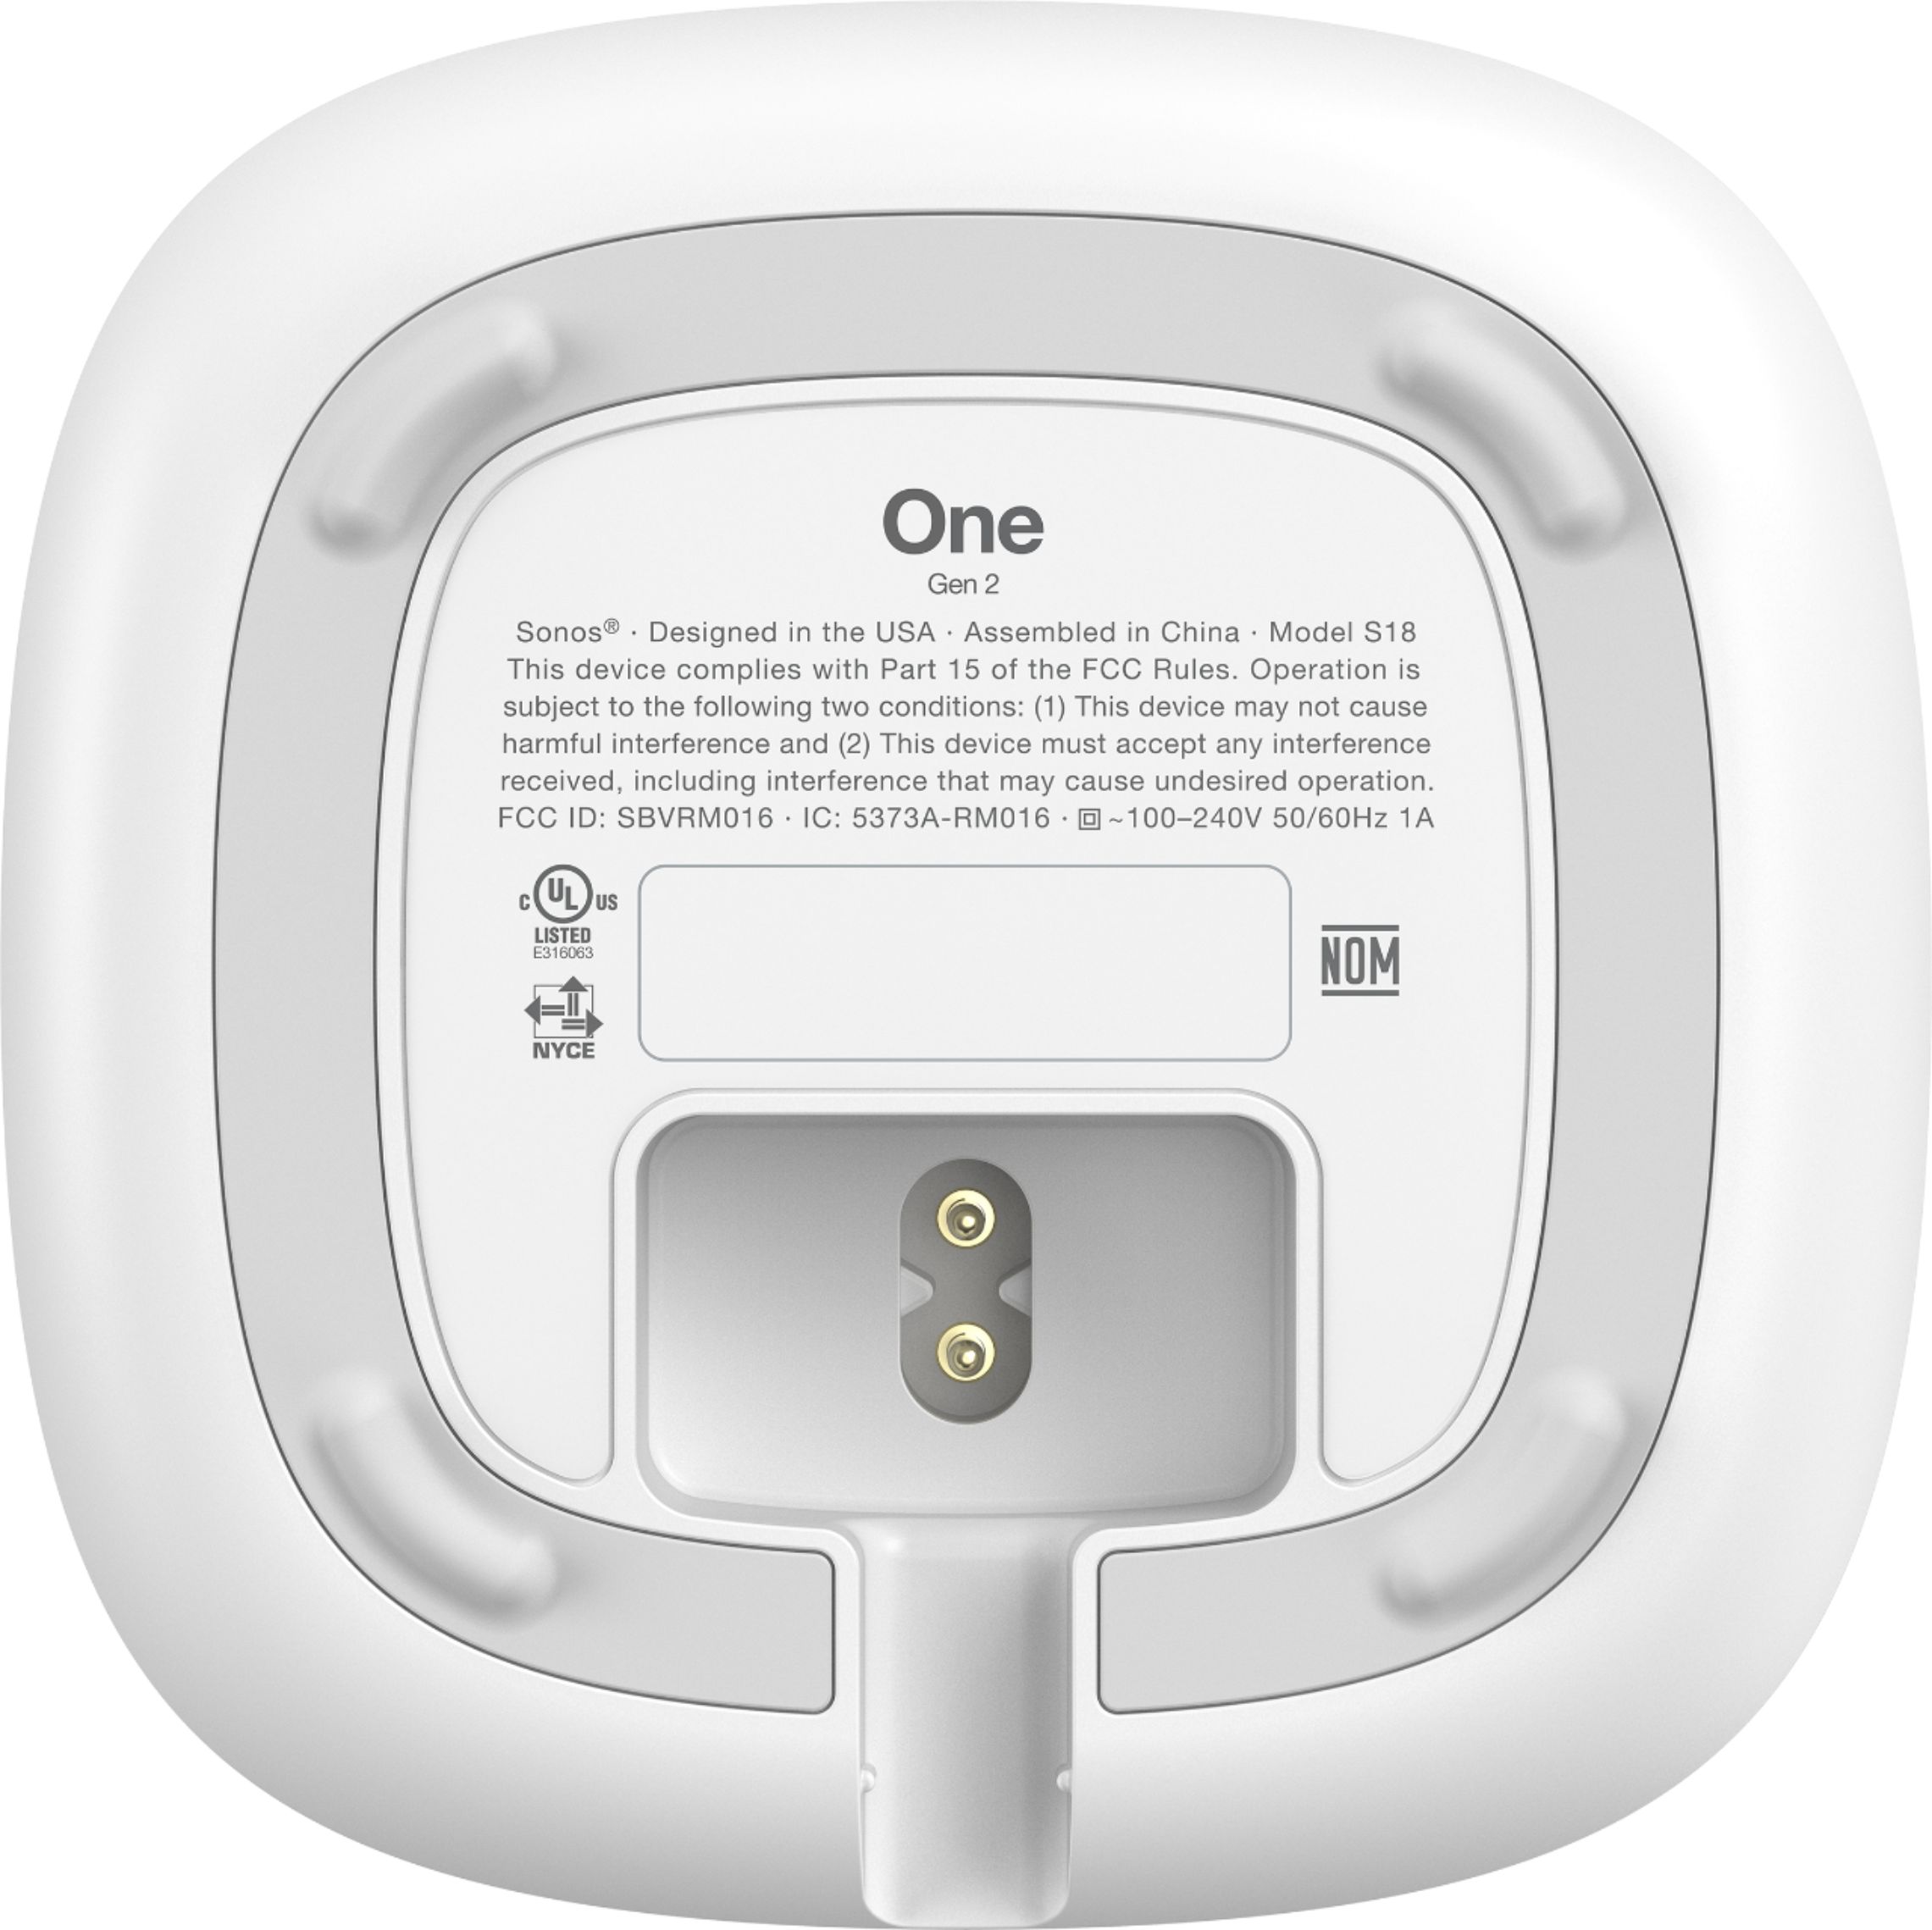 ONEG2US1 Speaker Best built-in (Gen Sonos White 2) - Control Voice Smart Buy with One